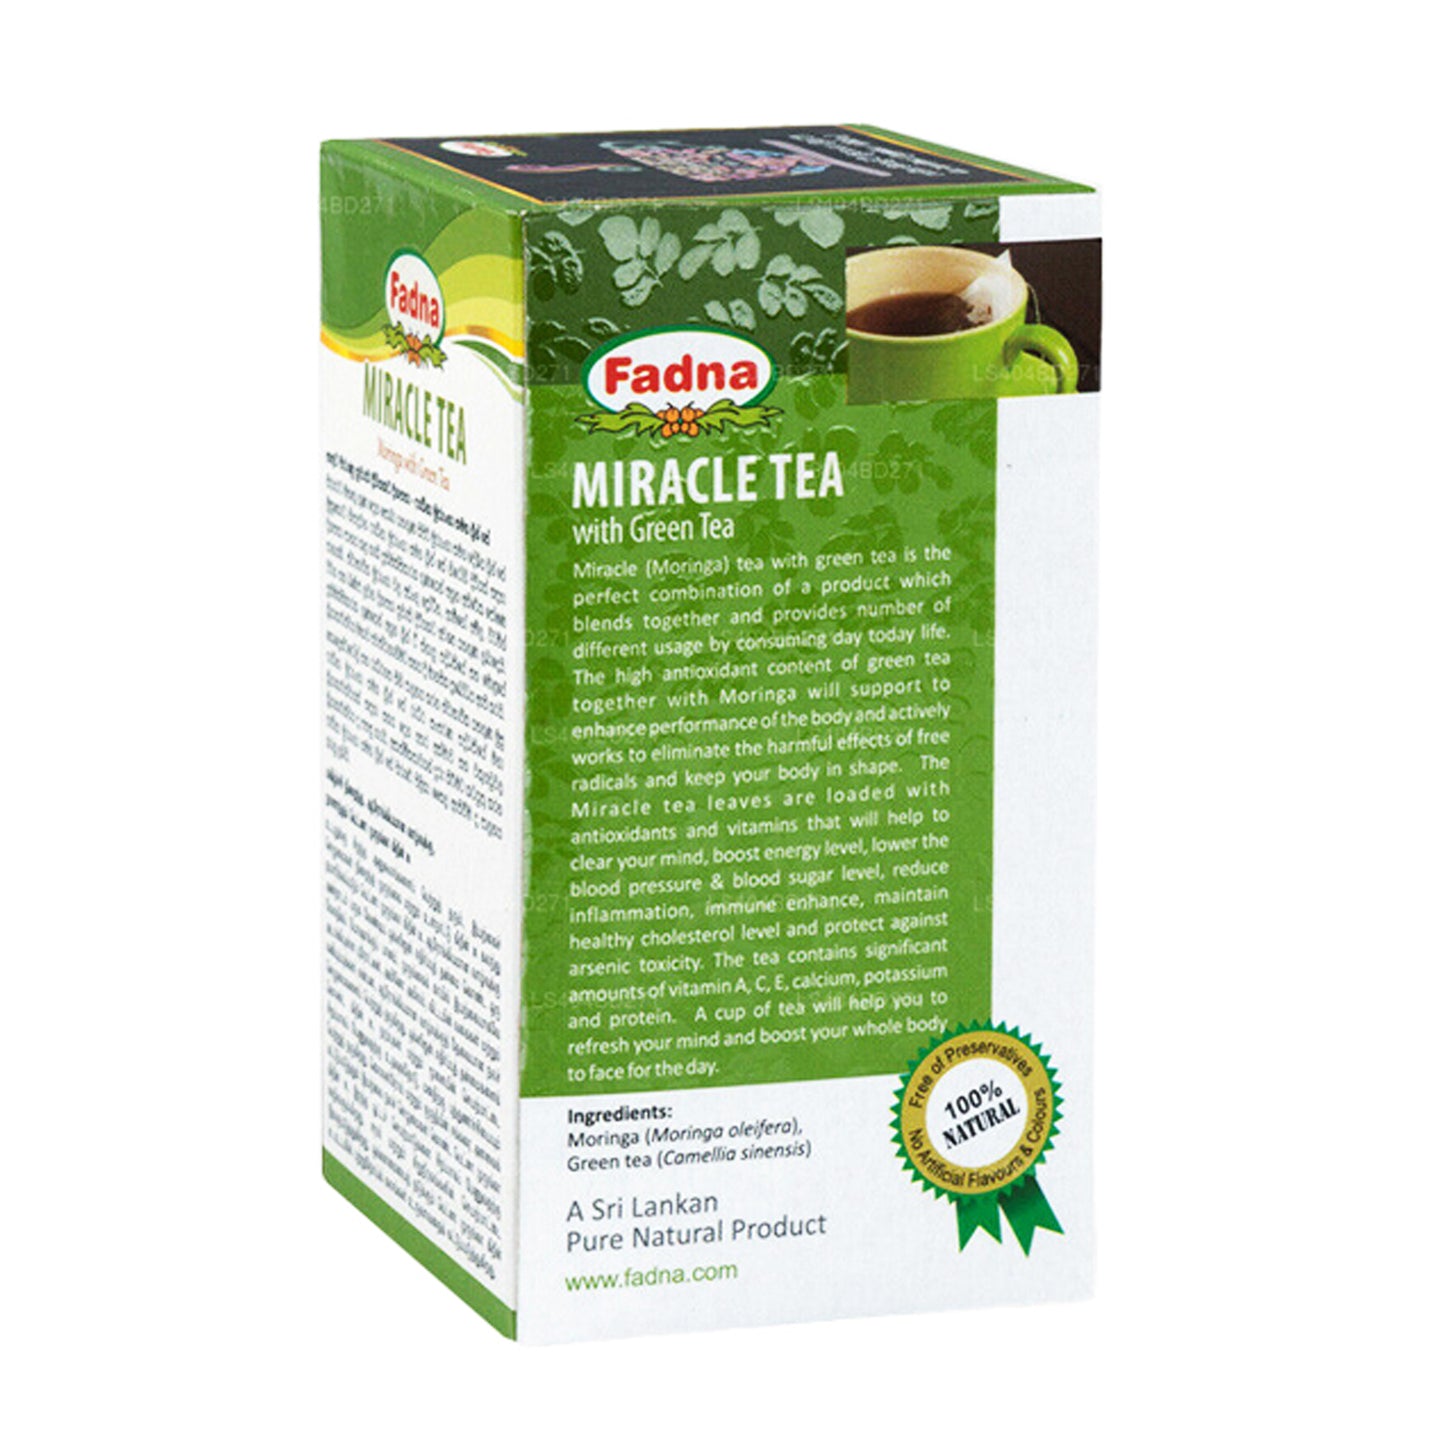 Fadna Miracle Tea Moringa rohelise teega (40g) 20 tee kotid